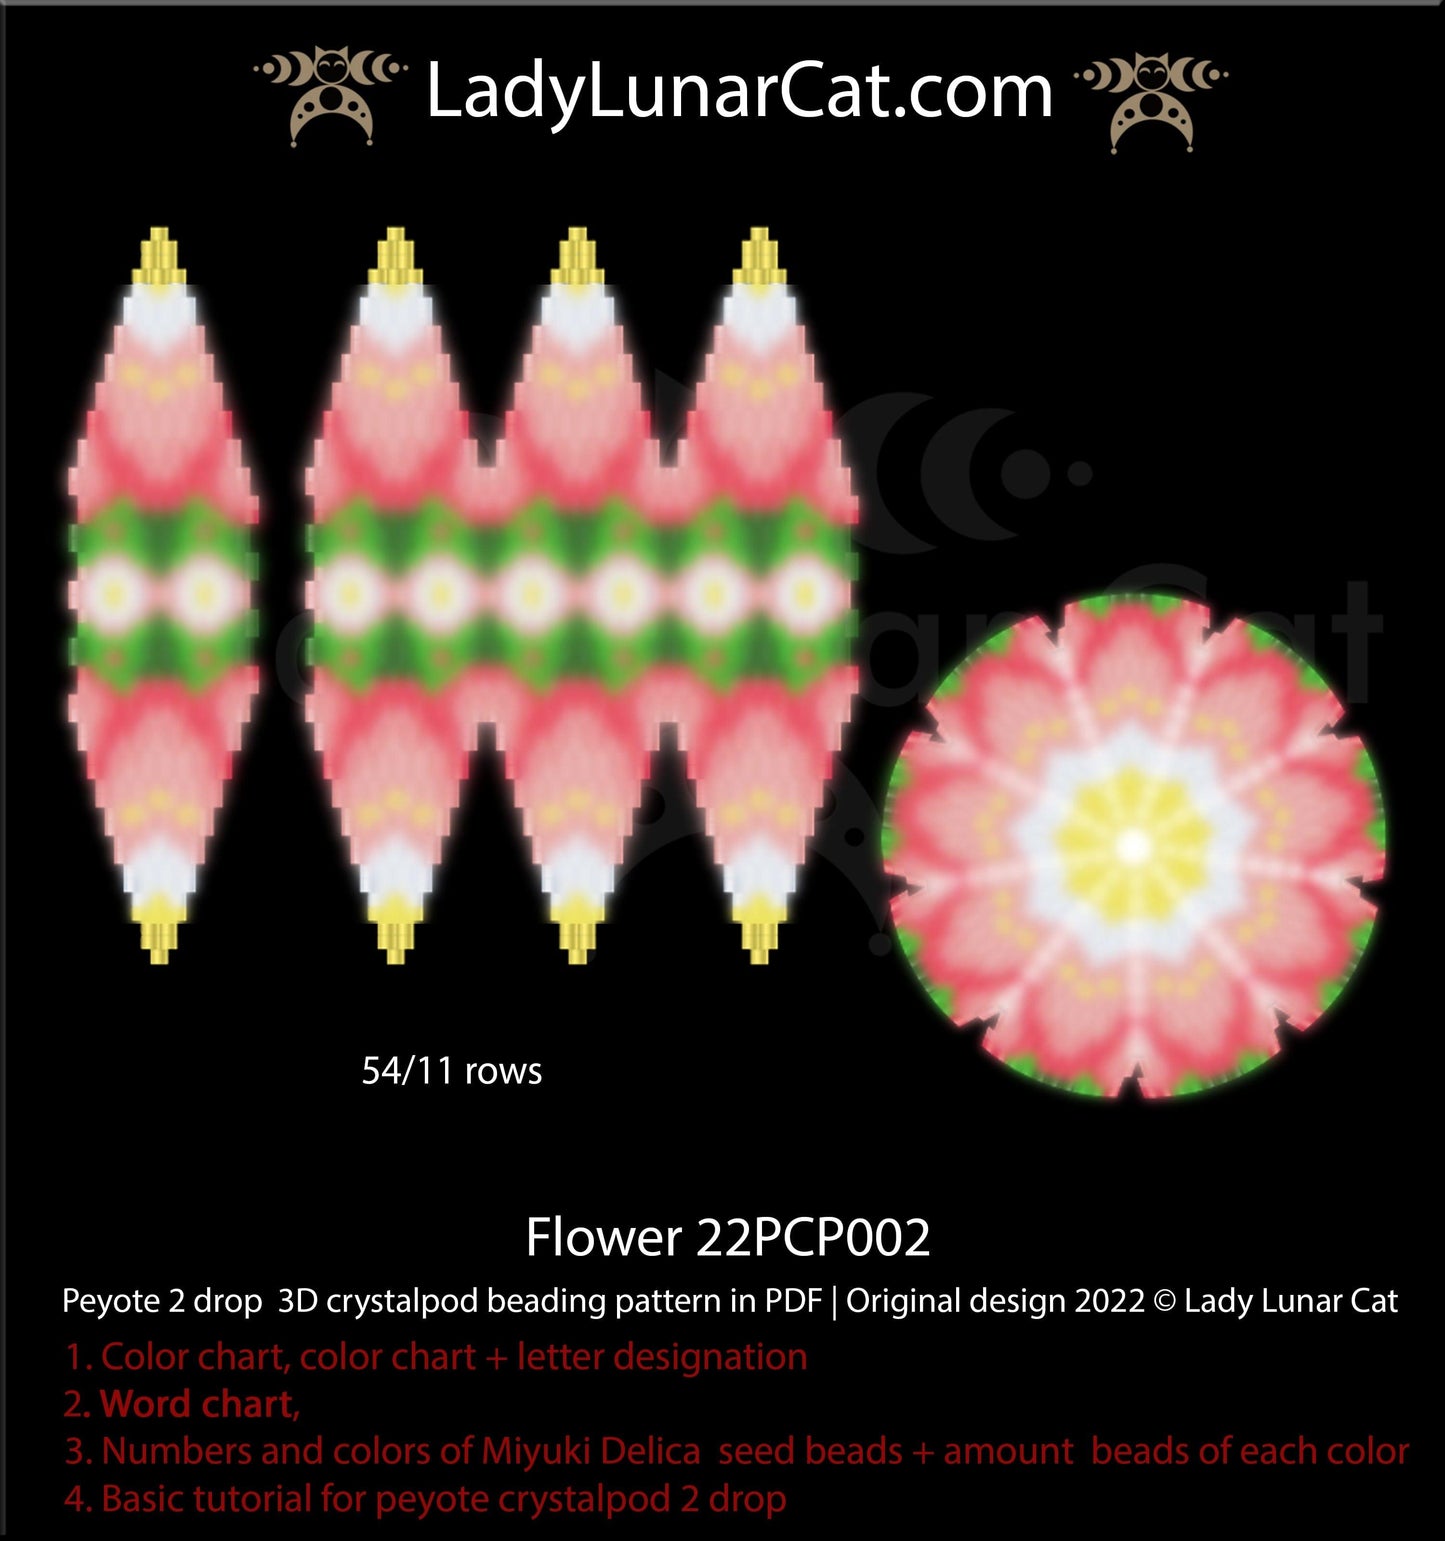 Peyote 2drop pod pattern or crystalpod pattern for beading  Flower 22PCP002 LadyLunarCat